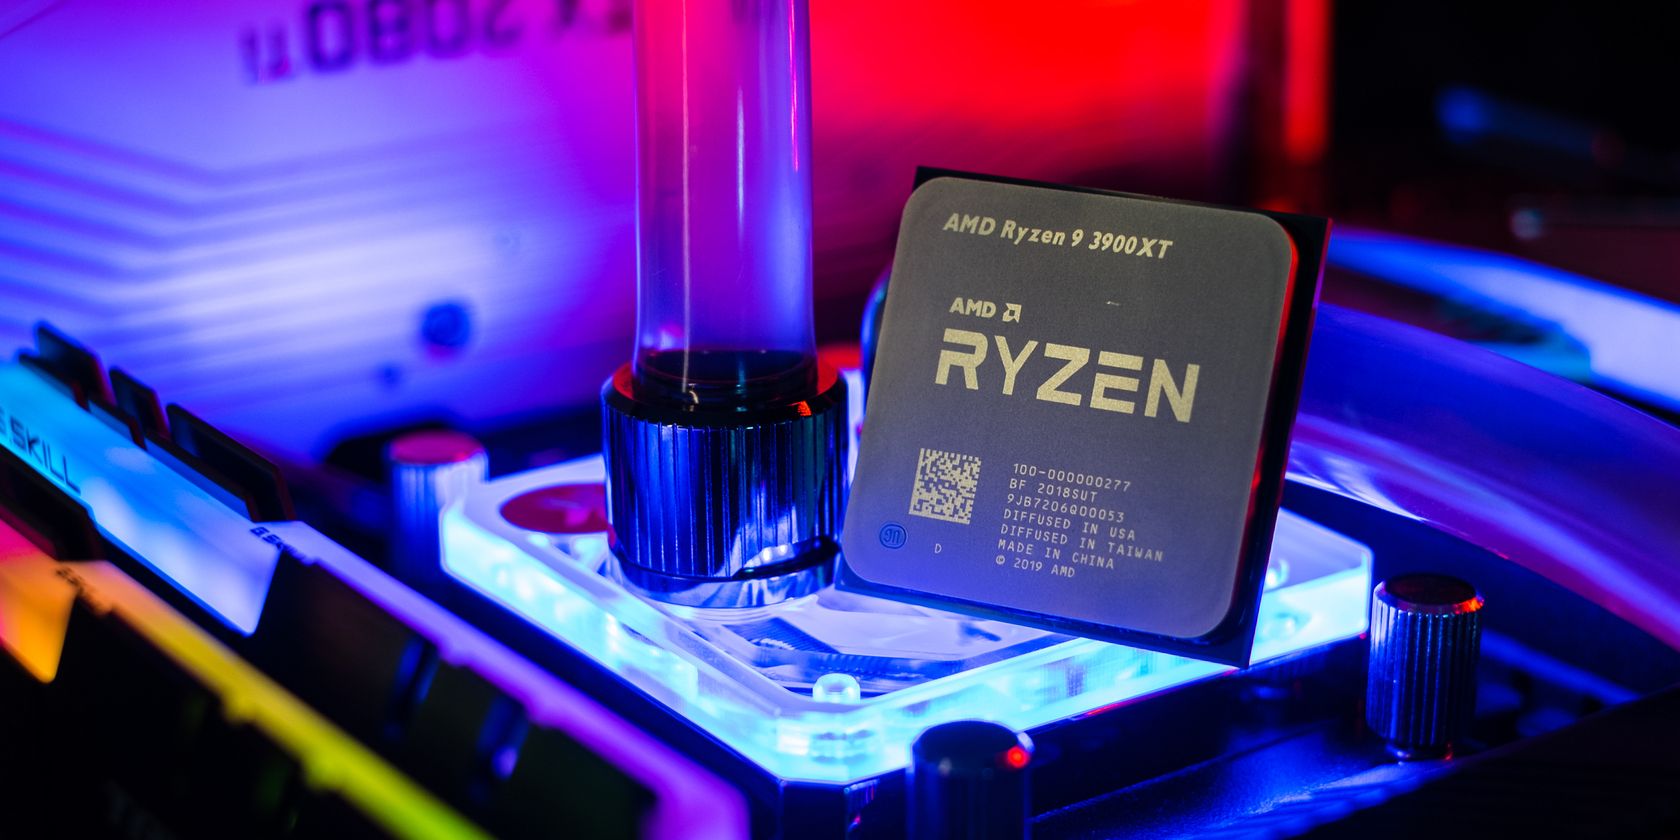 An AMD processor